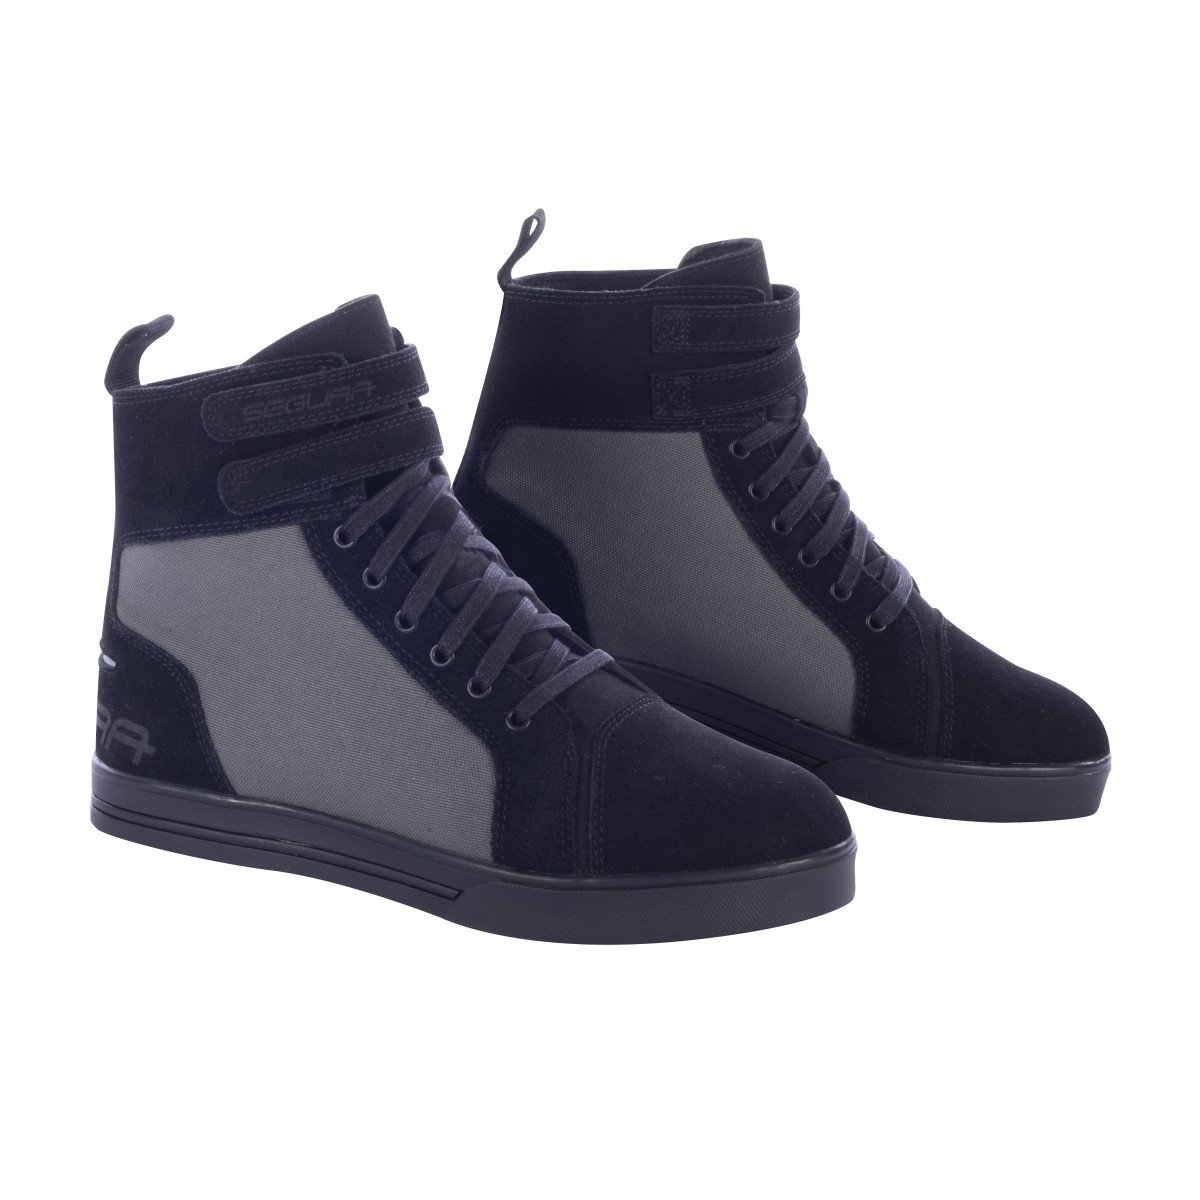 Image of Segura Sneakers Contact Black Grey Size 42 EN